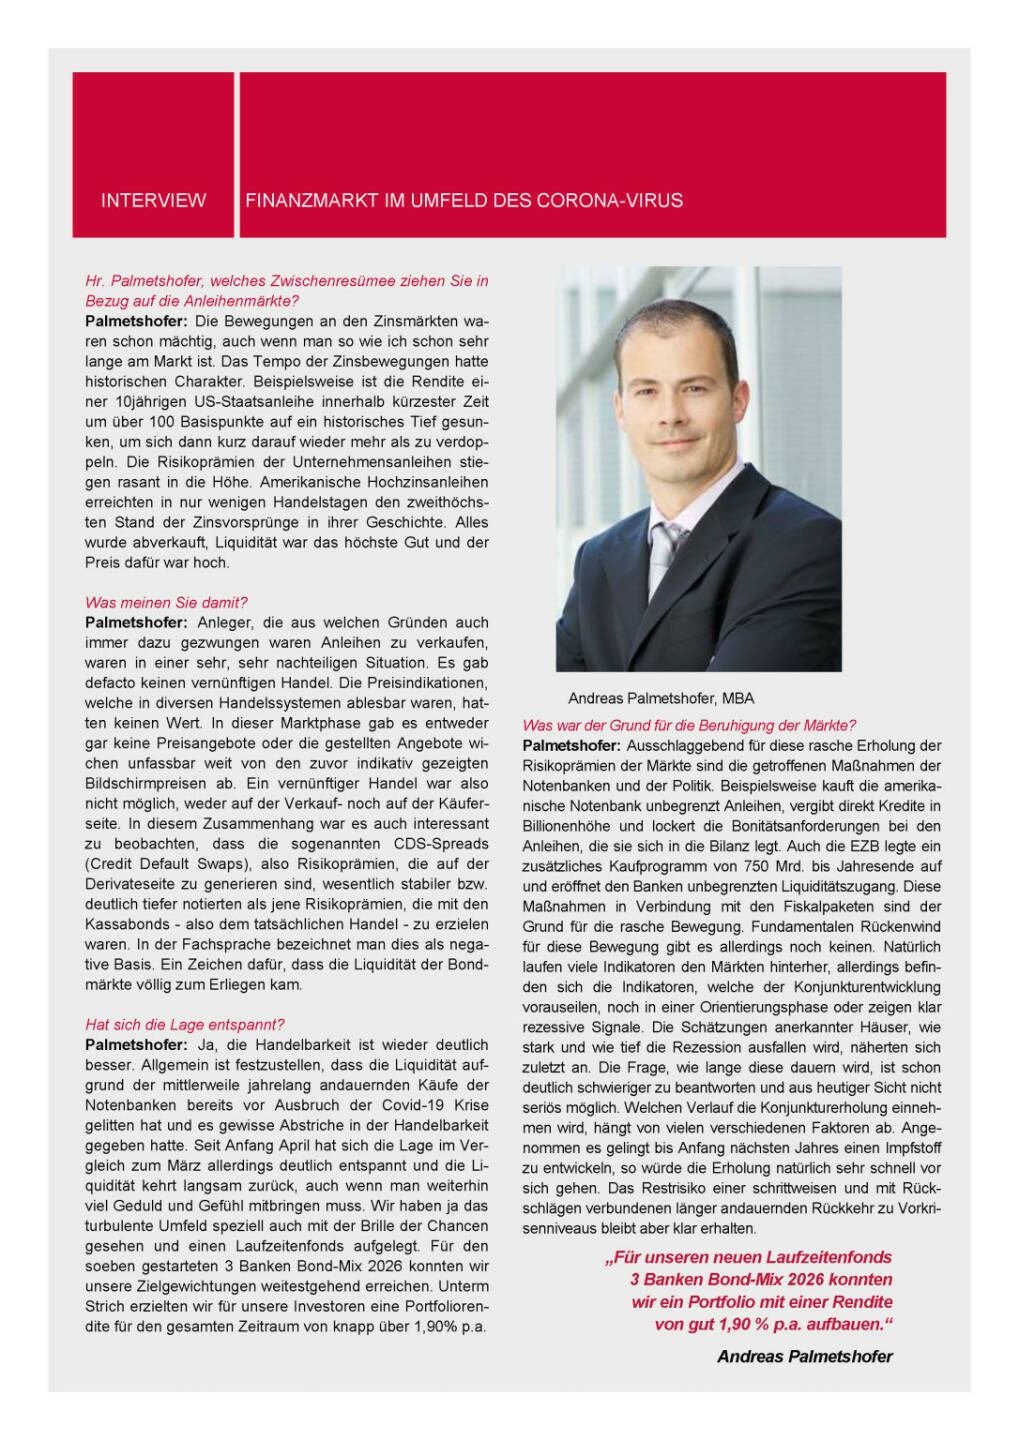 3 Banken-Generali Fonds Journal 06/2020 - Interview Andreas Palmetshofer